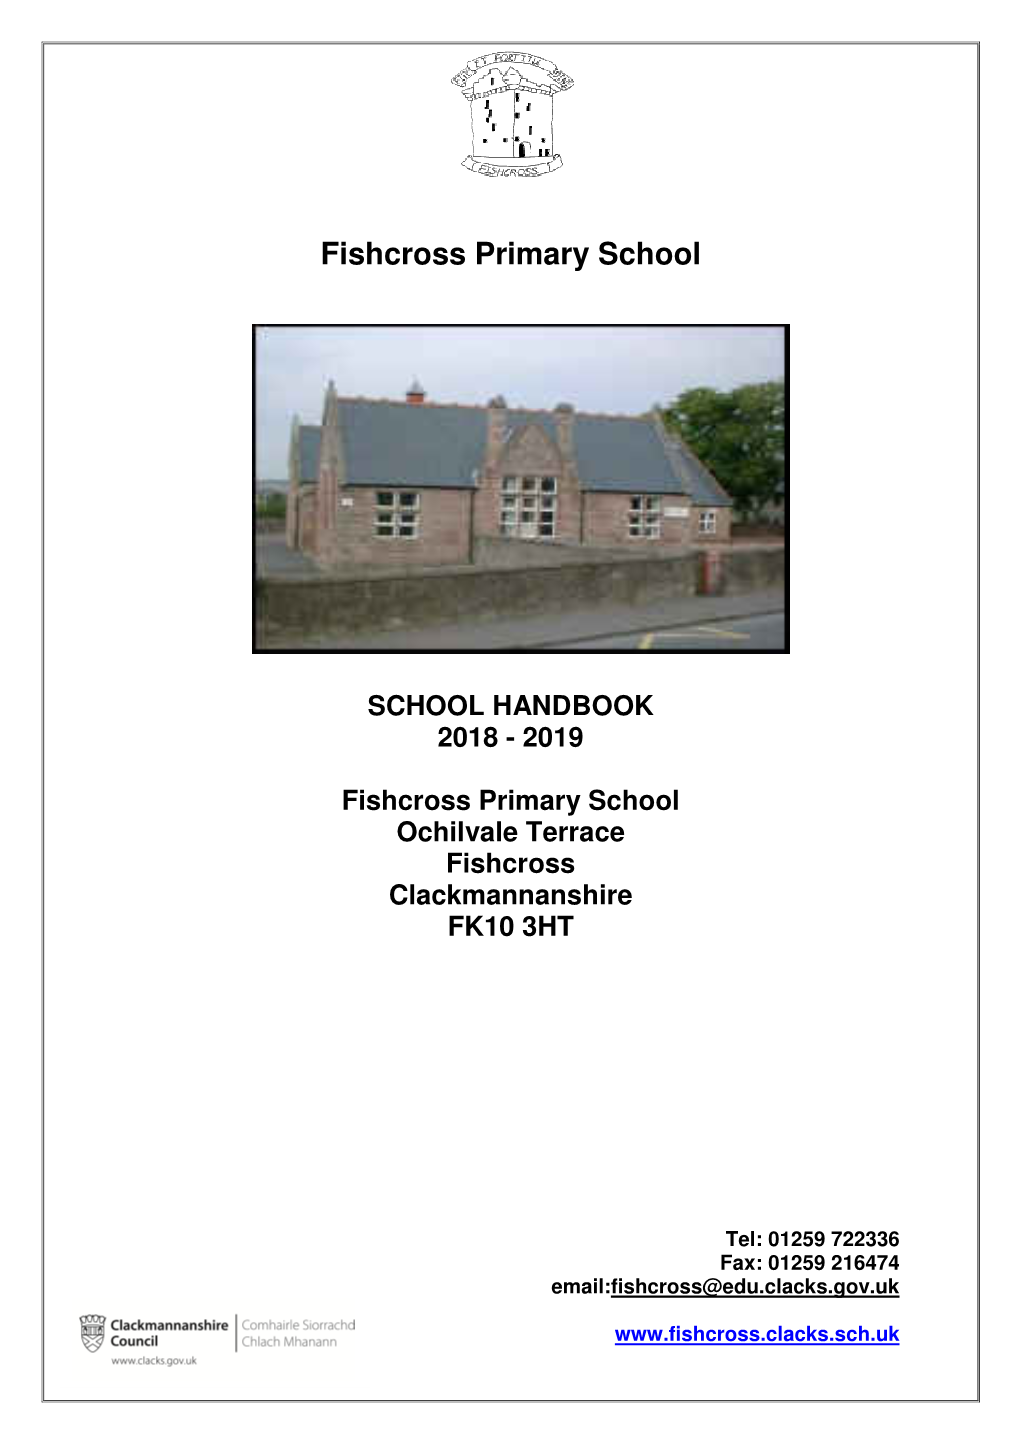 Fishcross PS School Handbook 2018-2019